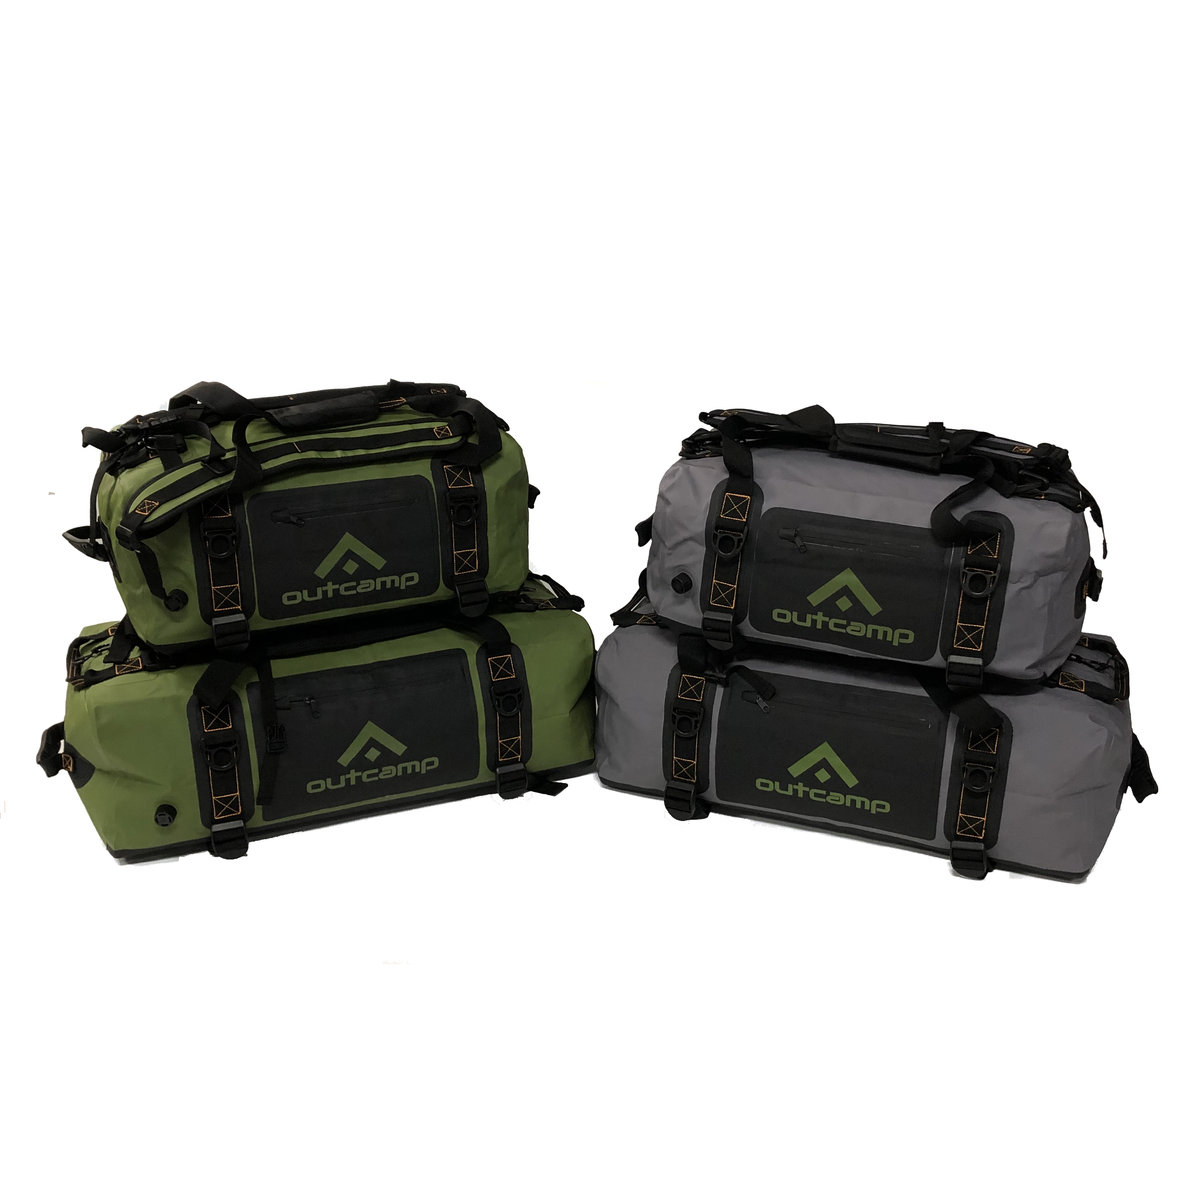 Outcamp waterproof duffel bag and backpack